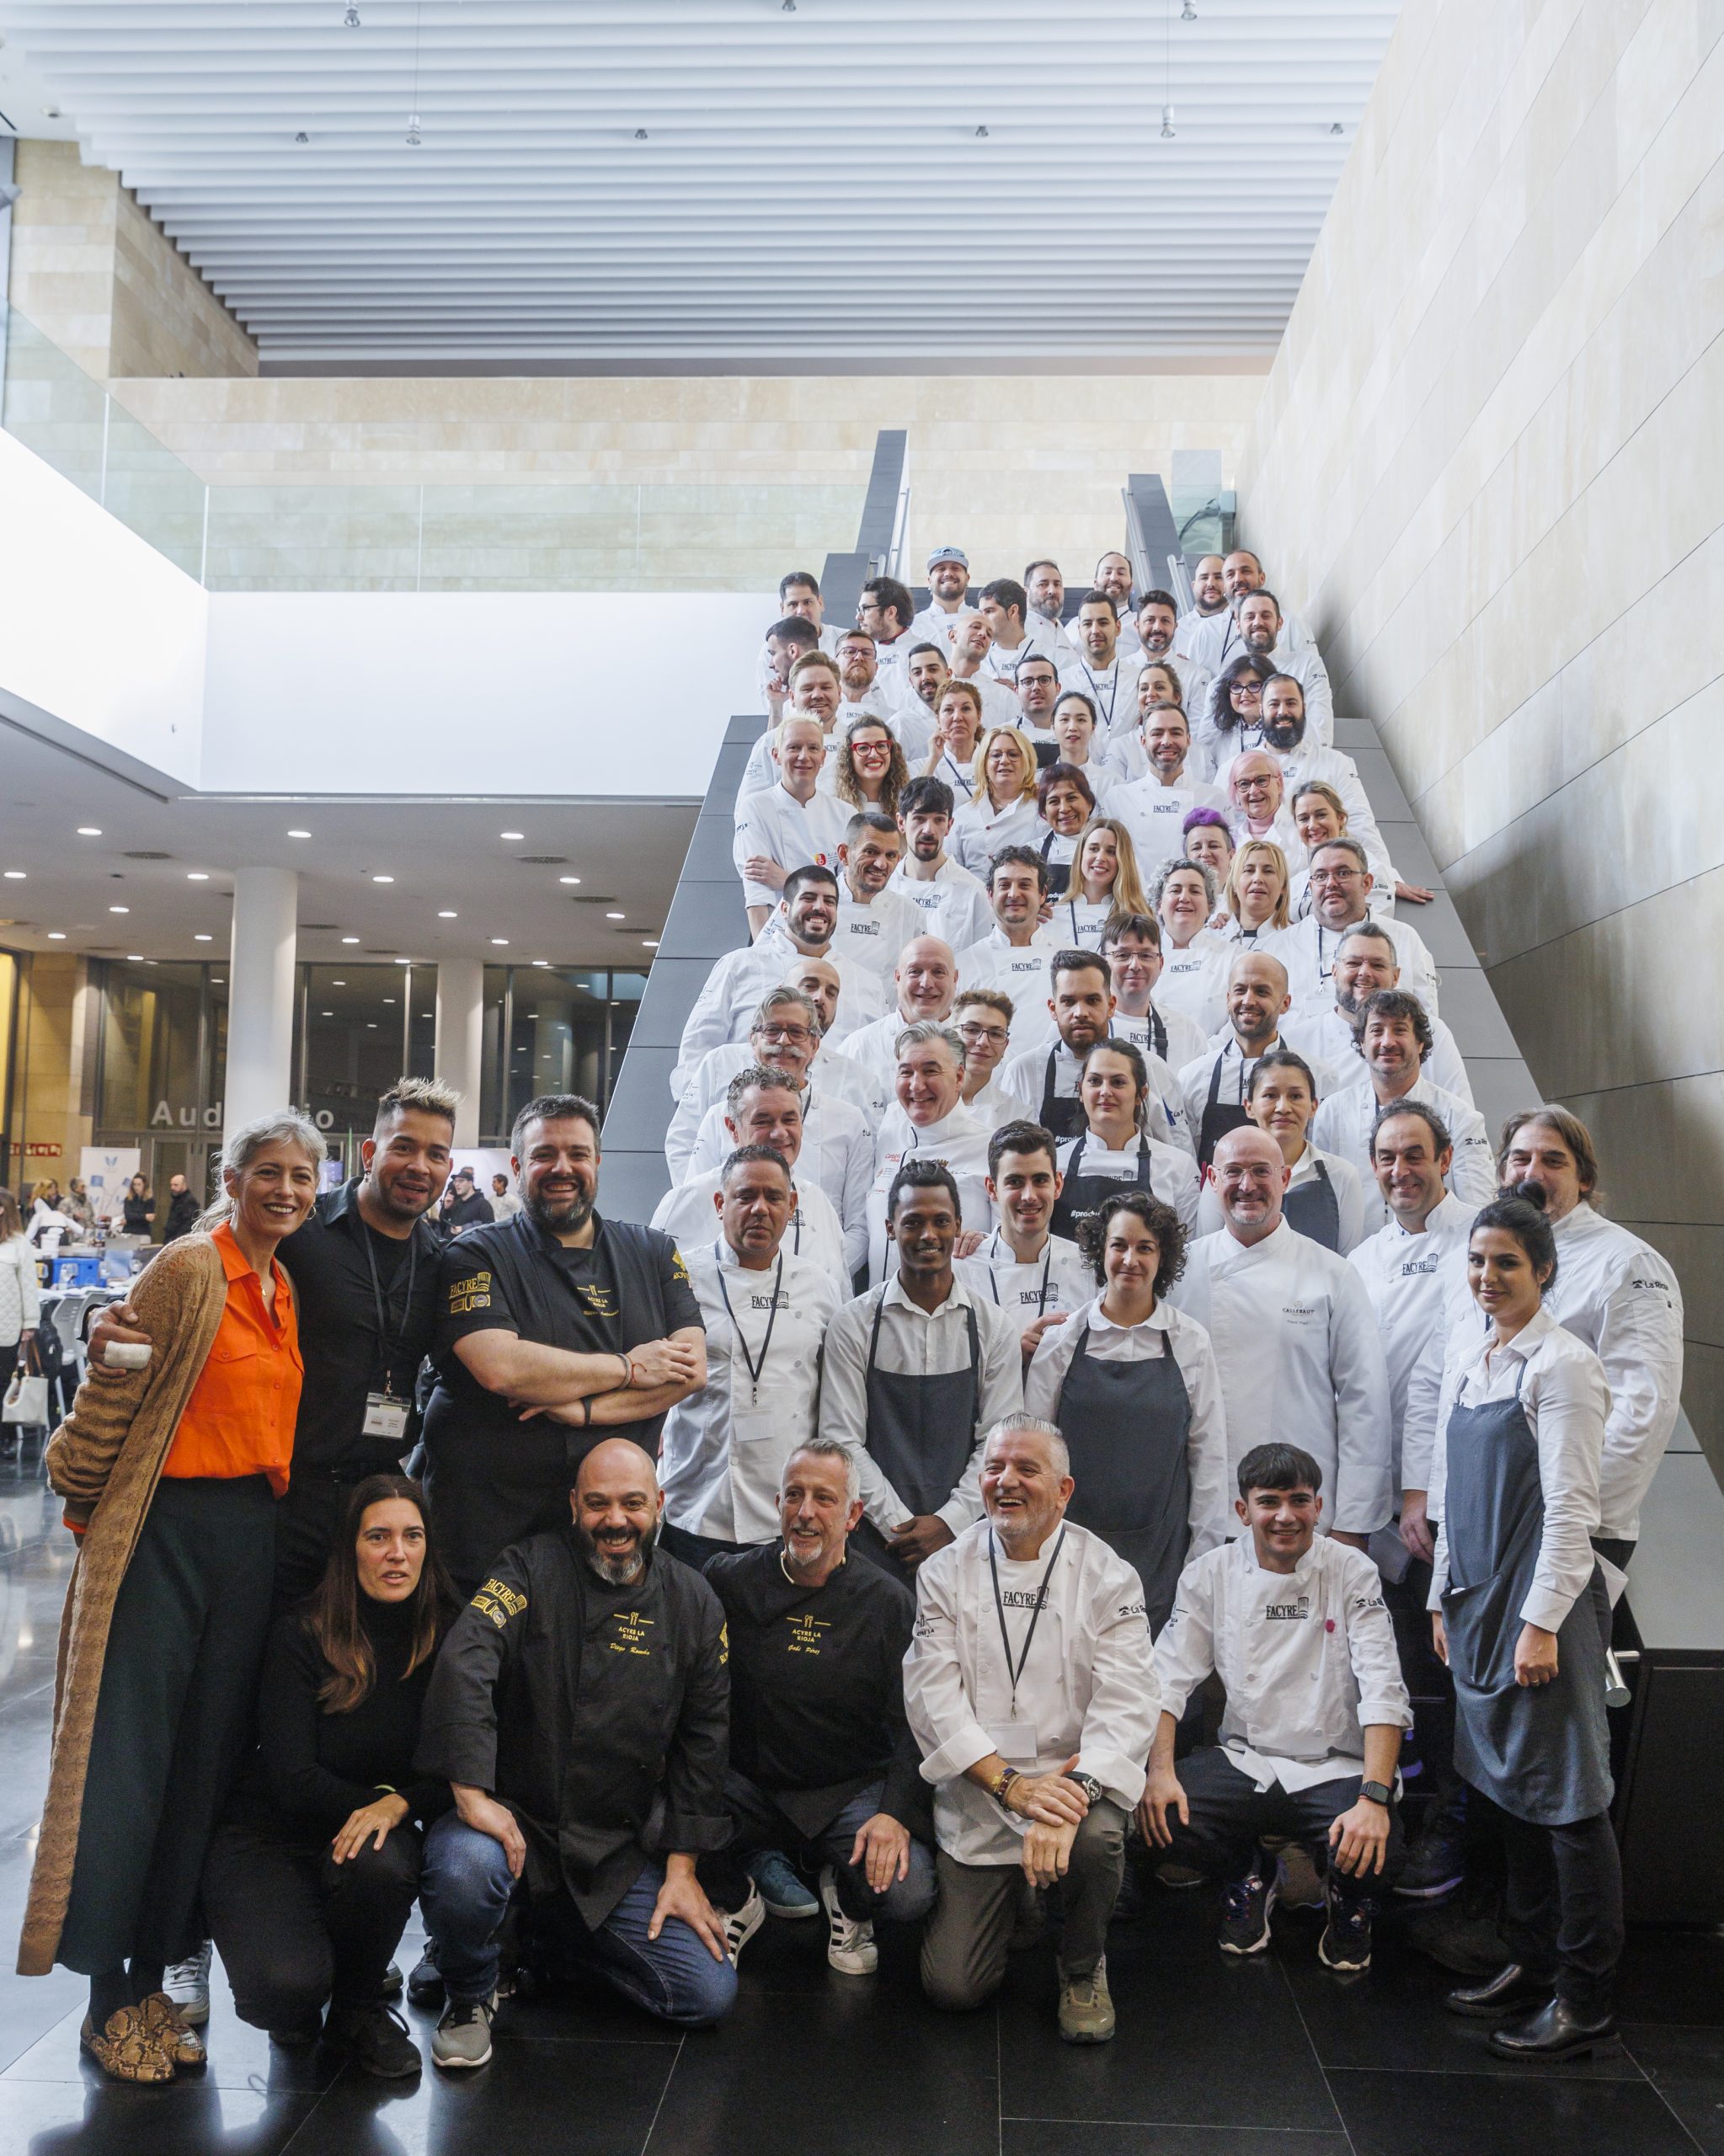 Éxito rotundo del campeonato nacional de cocina en Logroño